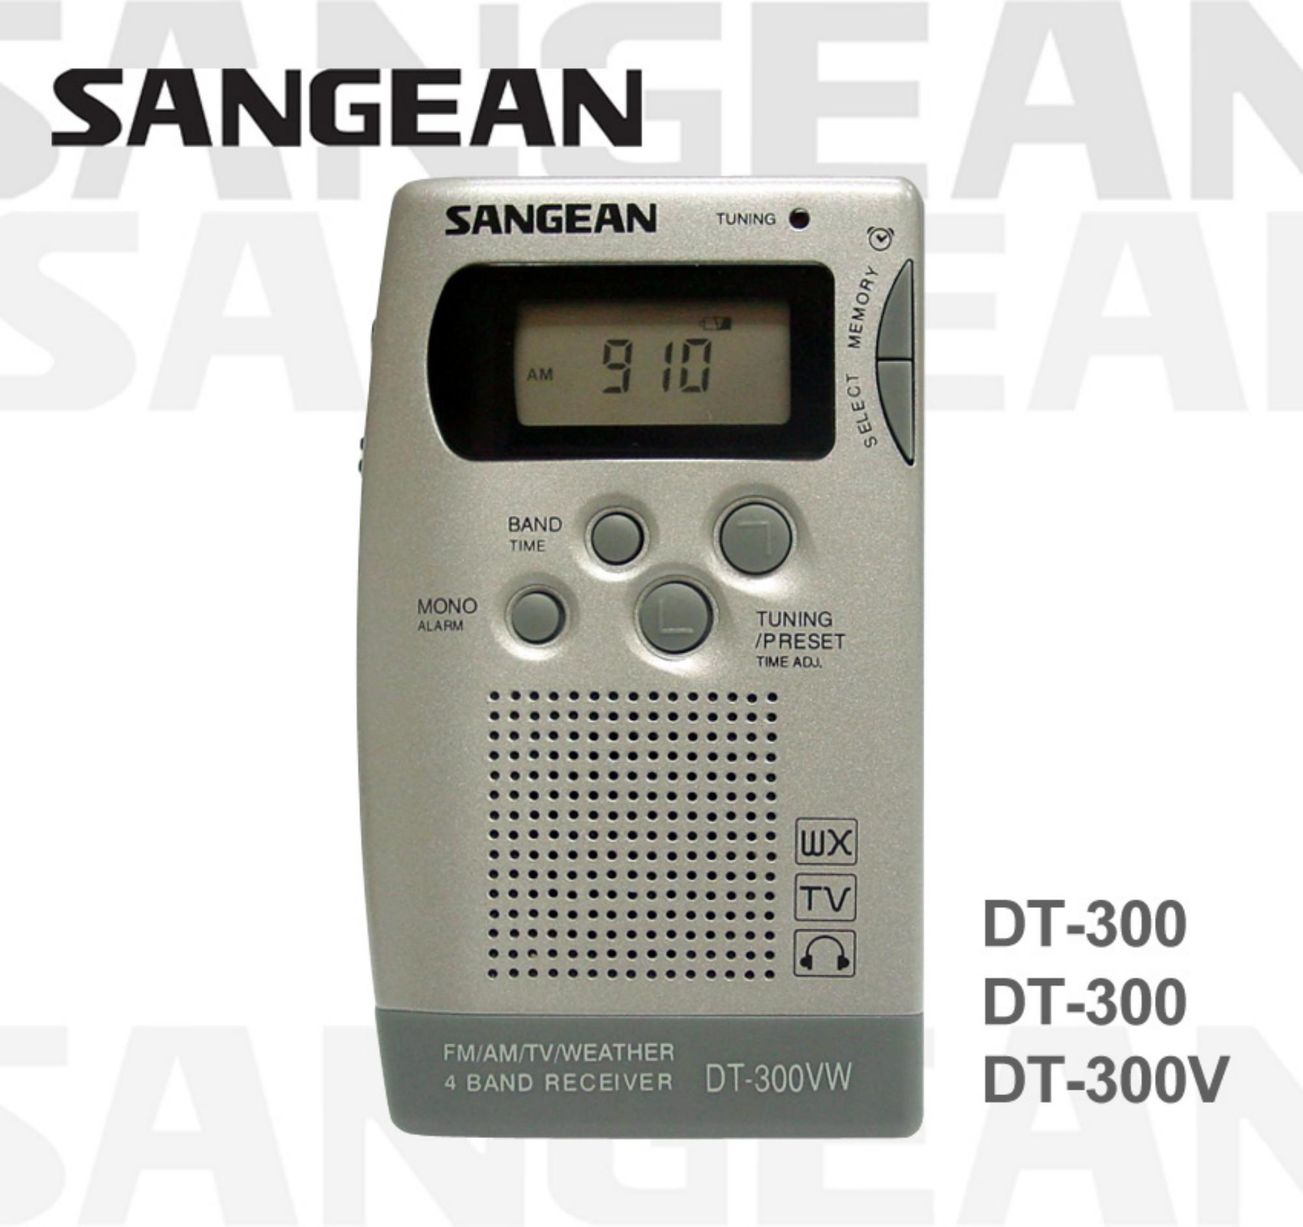 Sangean Electronics DT-300 Portable Radio User Manual